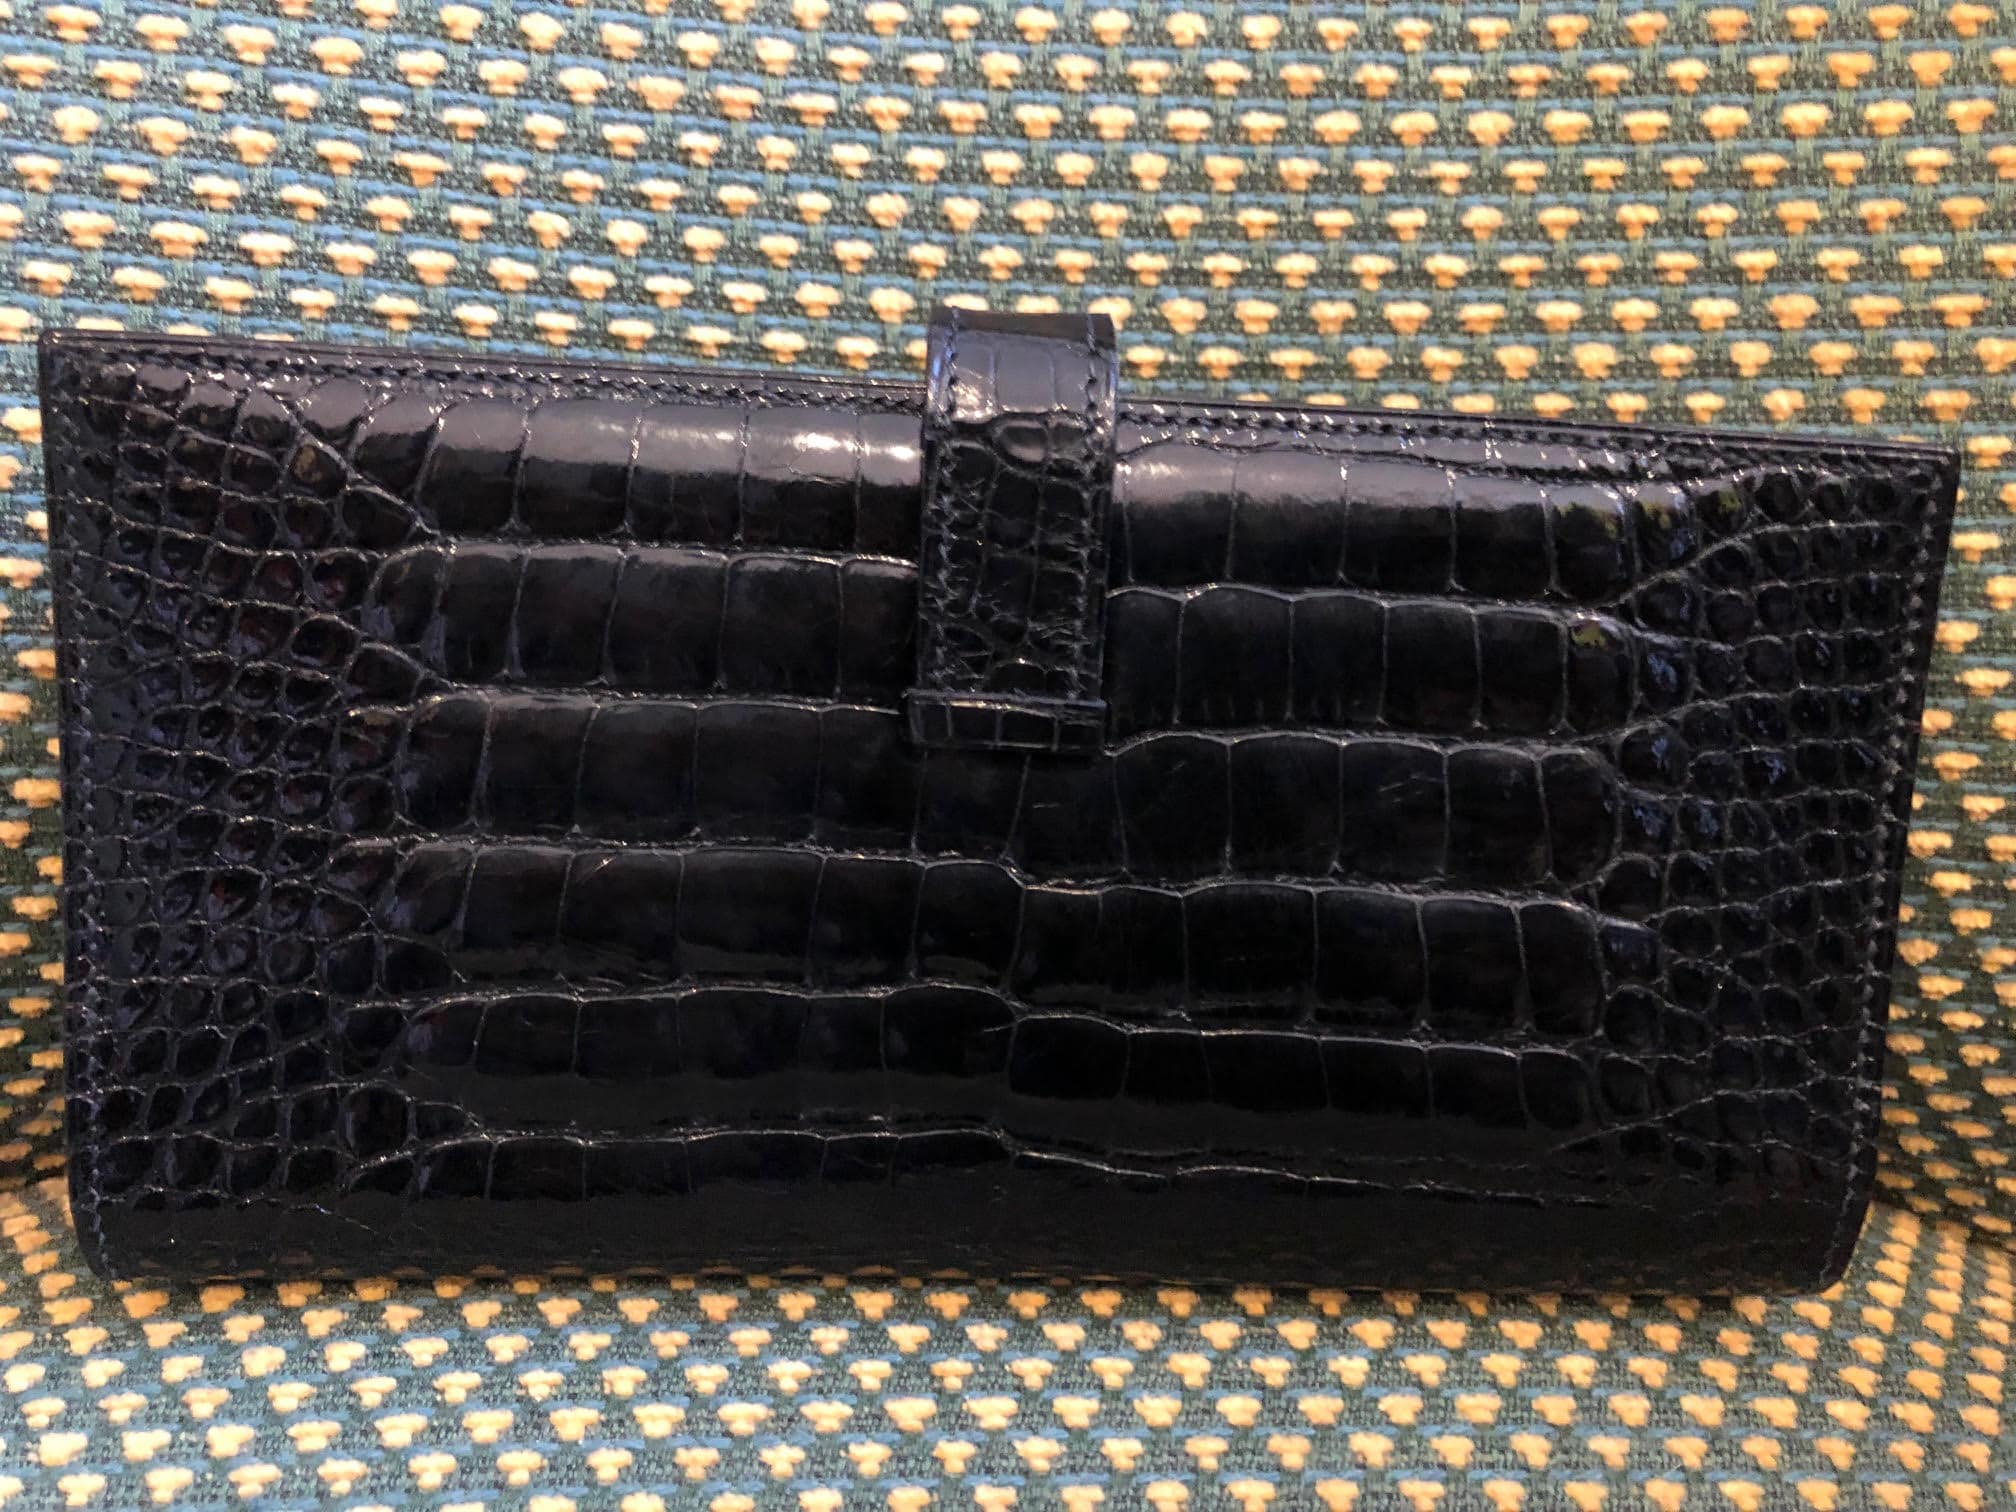 HERMES Bearn H Wallet Black Alligator Crocodile Constance Buckle - Chelsea  Vintage Couture